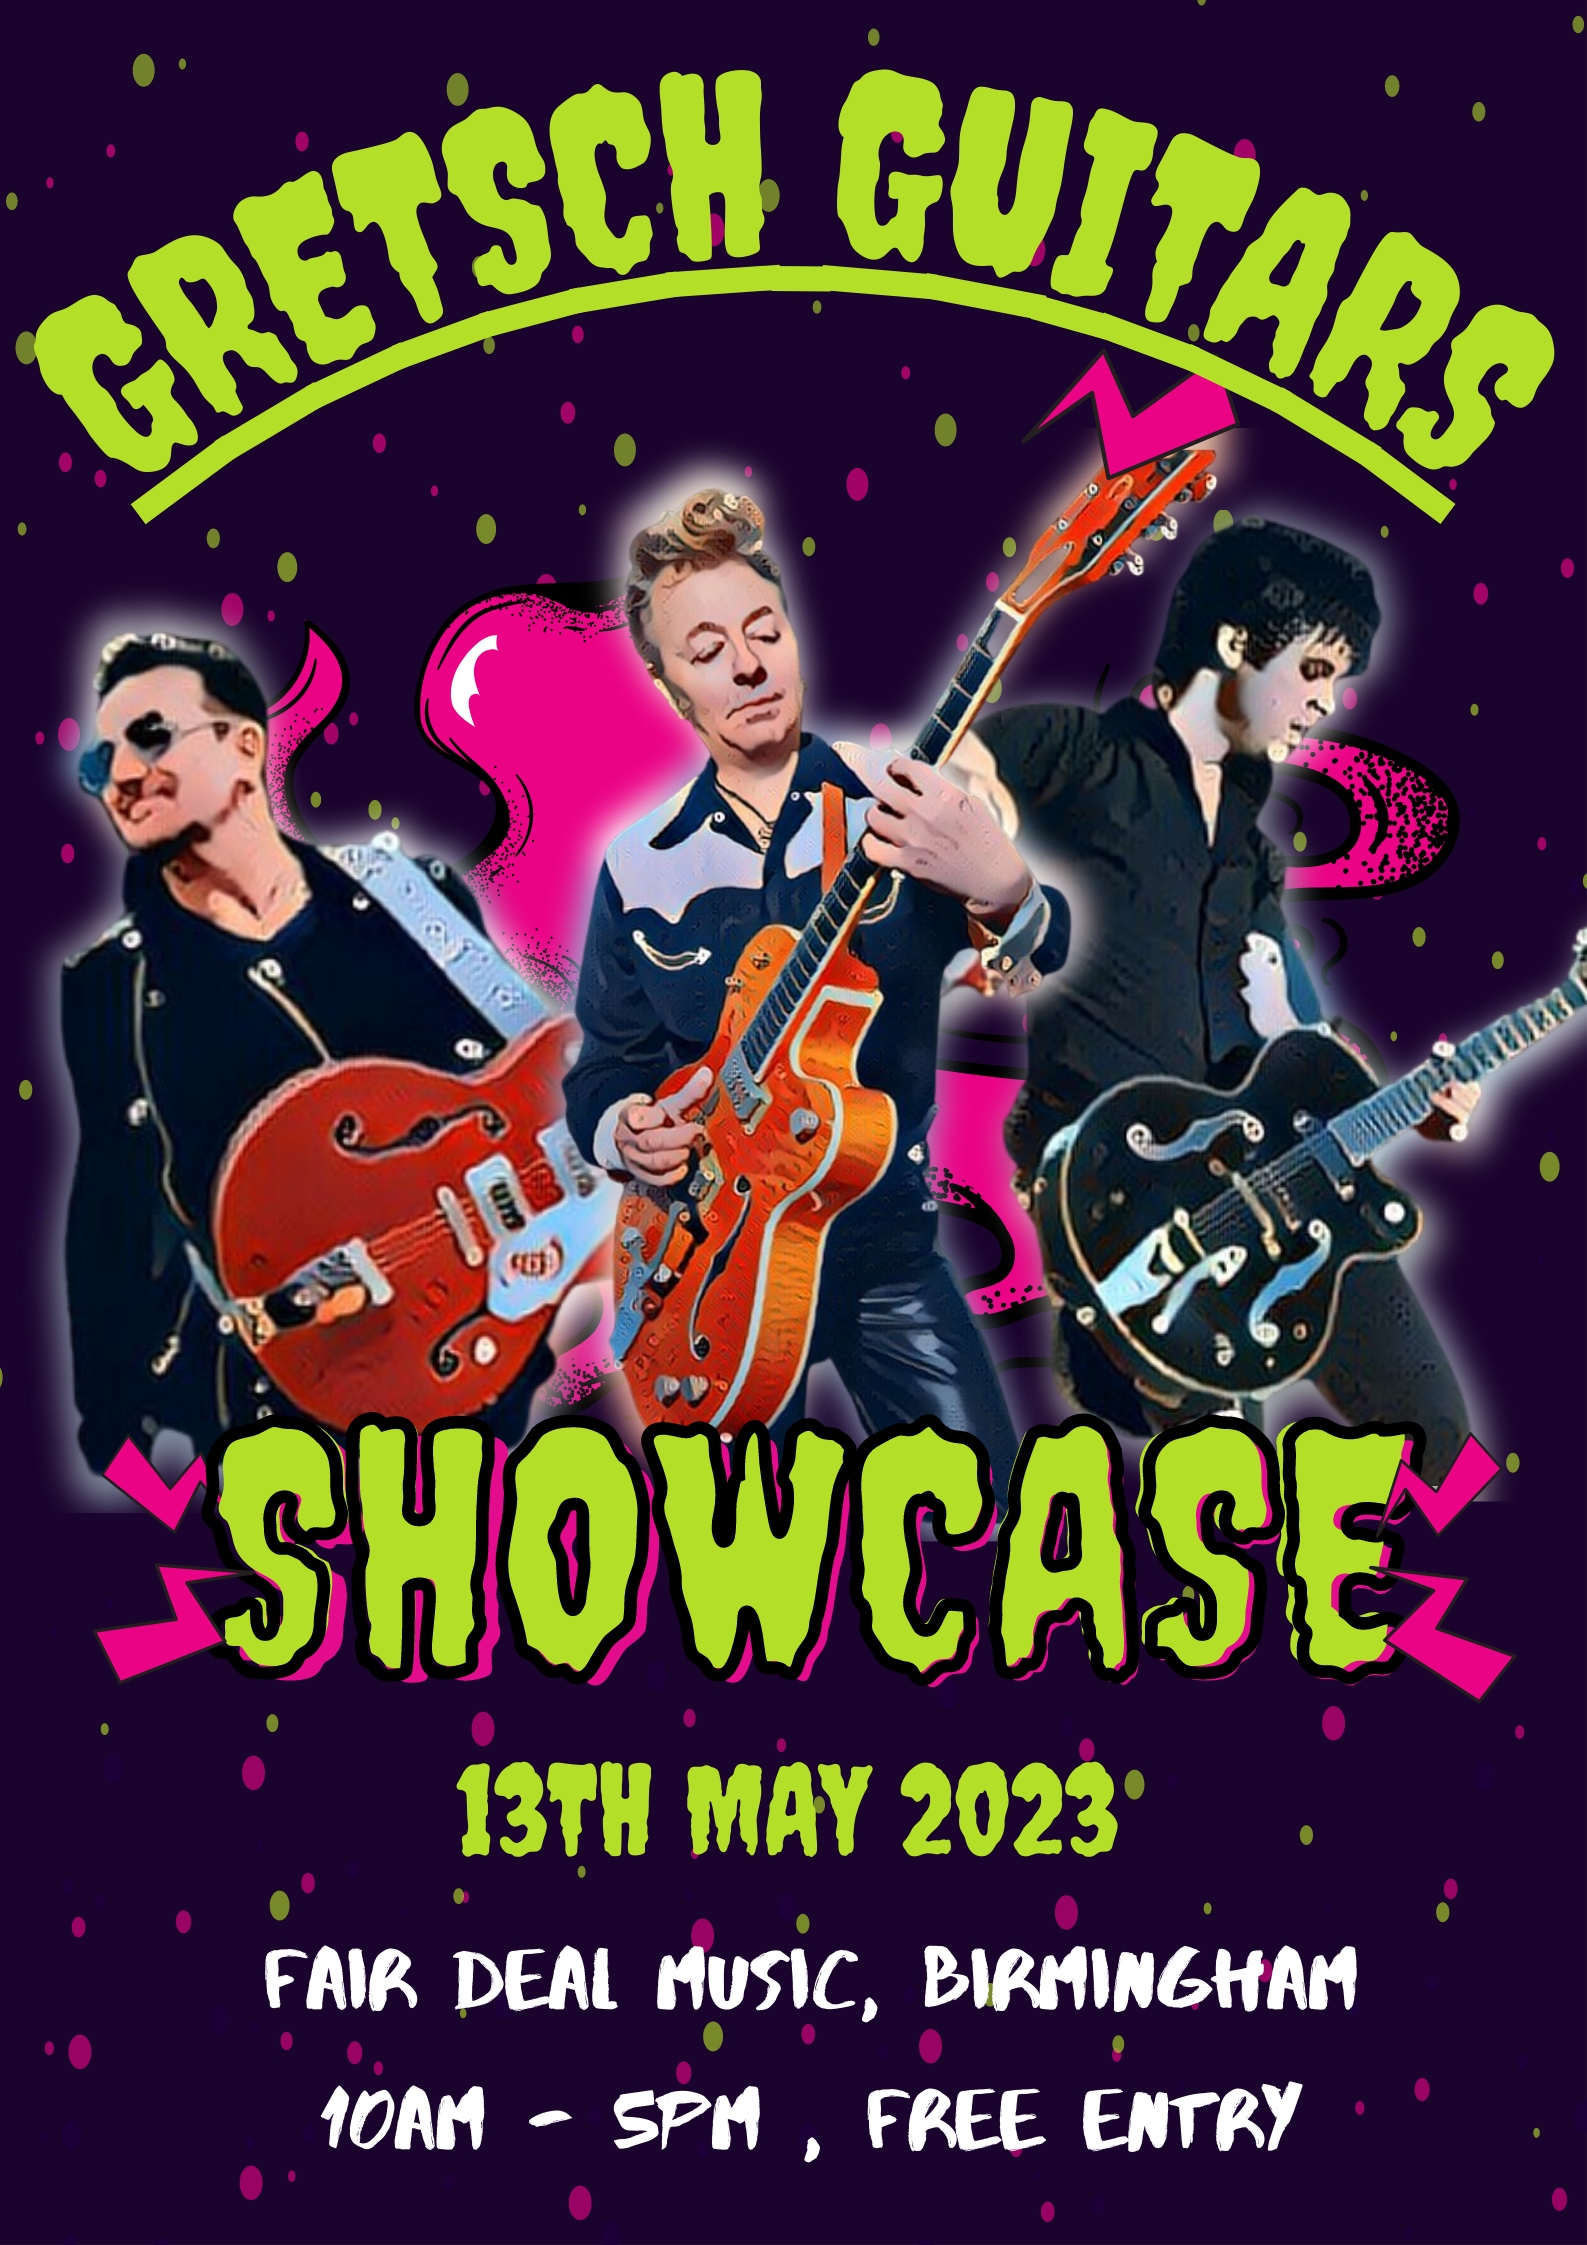 Gretsch Guitars Showcase - Saturday 13th May